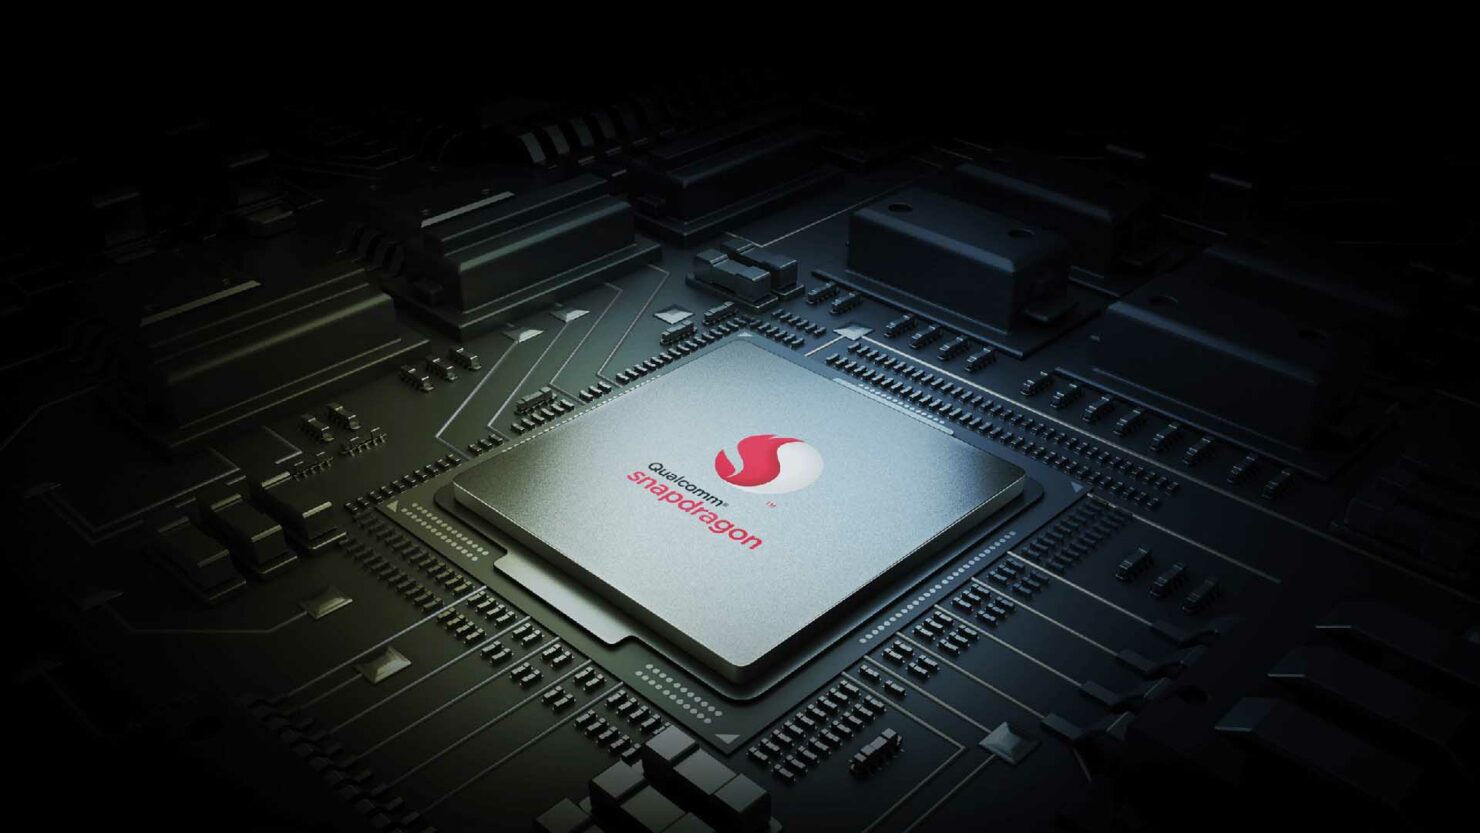 Snapdragon 8 Gen1 processor breaks Dimensity 9000 record in AnTuTu - over 1 million points!